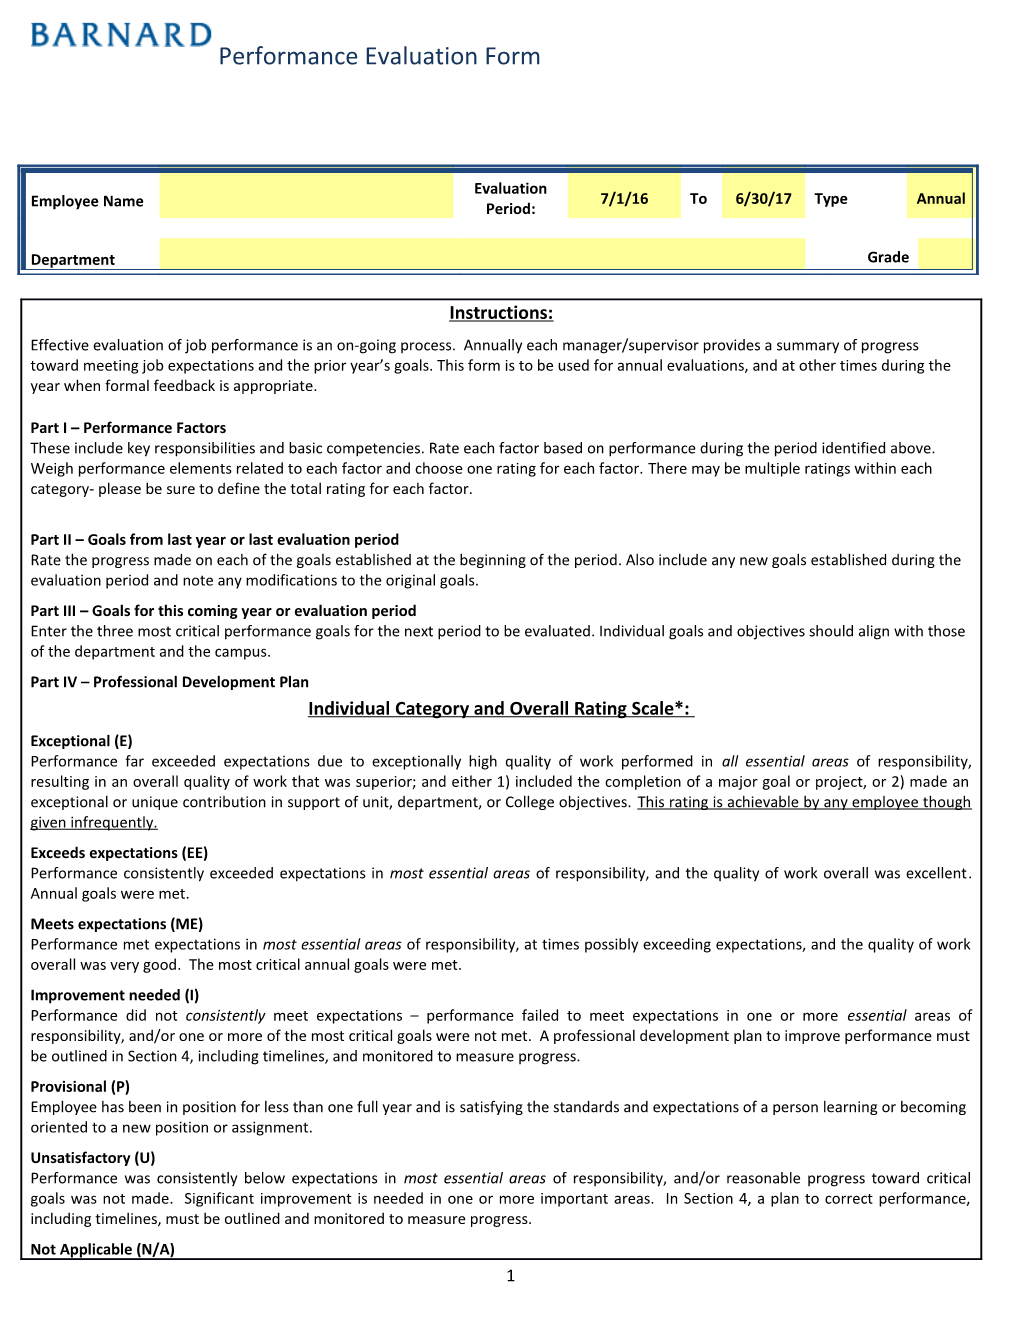 Barnard College Annual Performance Evaluation Form